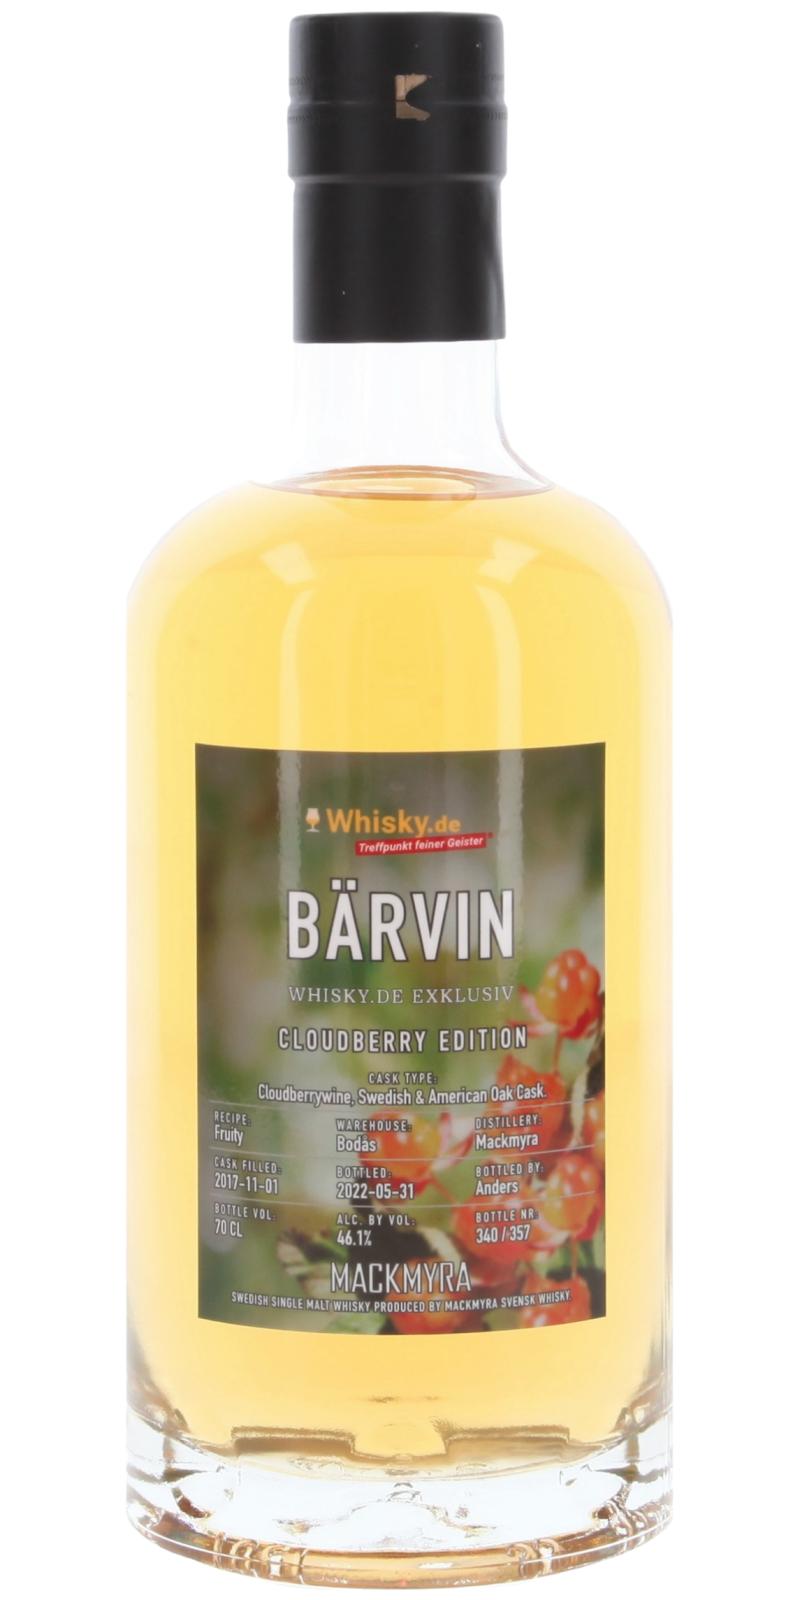 Mackmyra Barvin Whisky.de exklusiv 46.1% 700ml